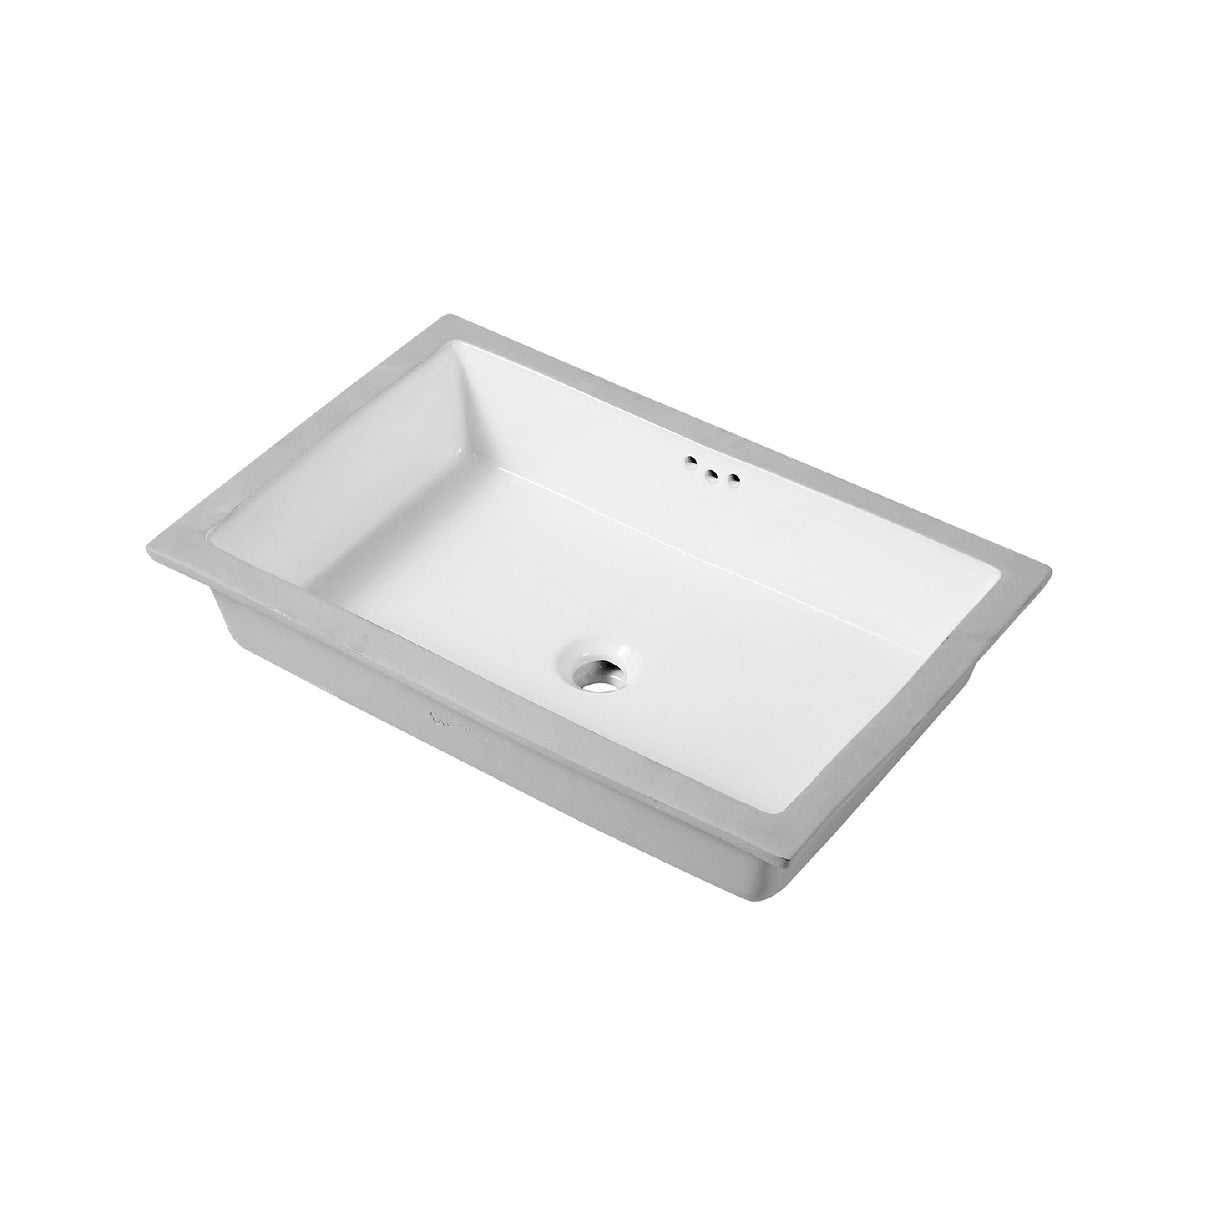 DAX Ceramic Single Bowl Undermount Bathroom Basin, Glossy White BSN-2814